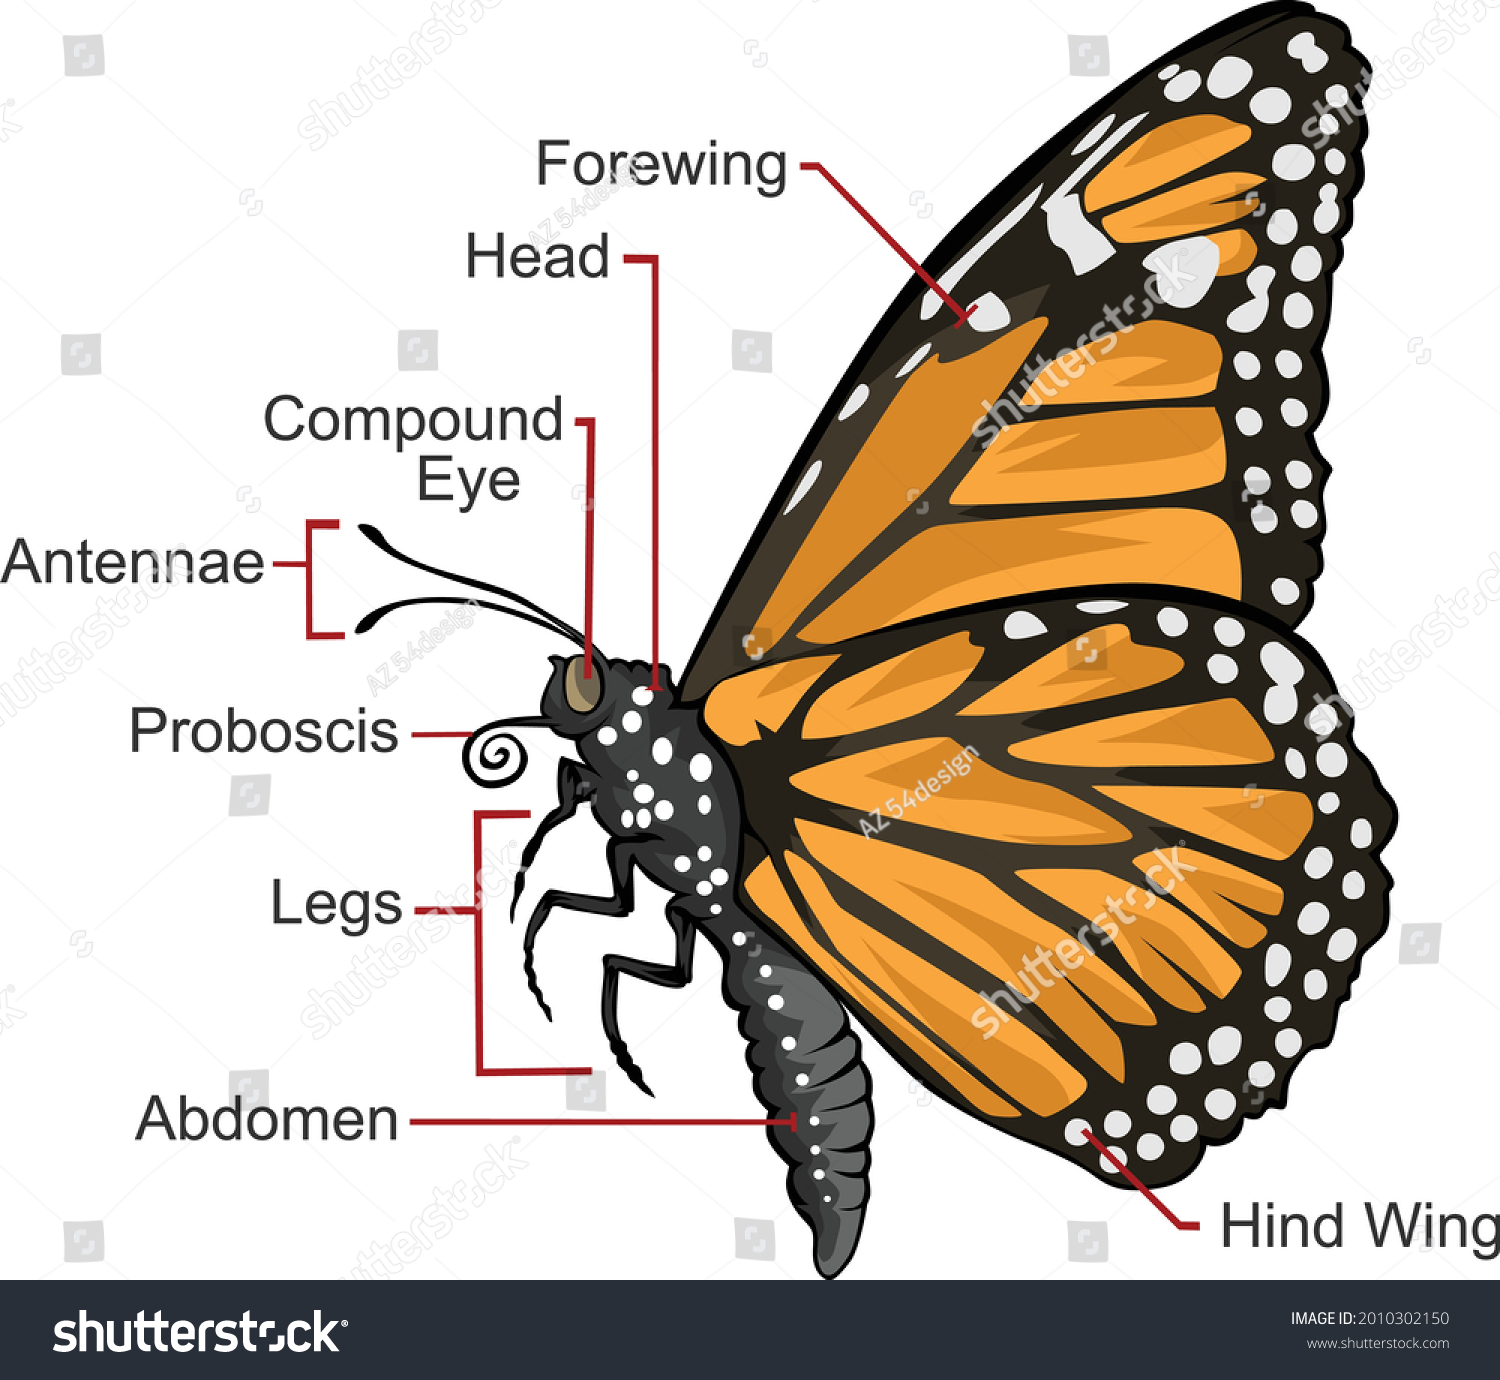 butterfly-body-parts-stock-vectors-images-vector-art-shutterstock